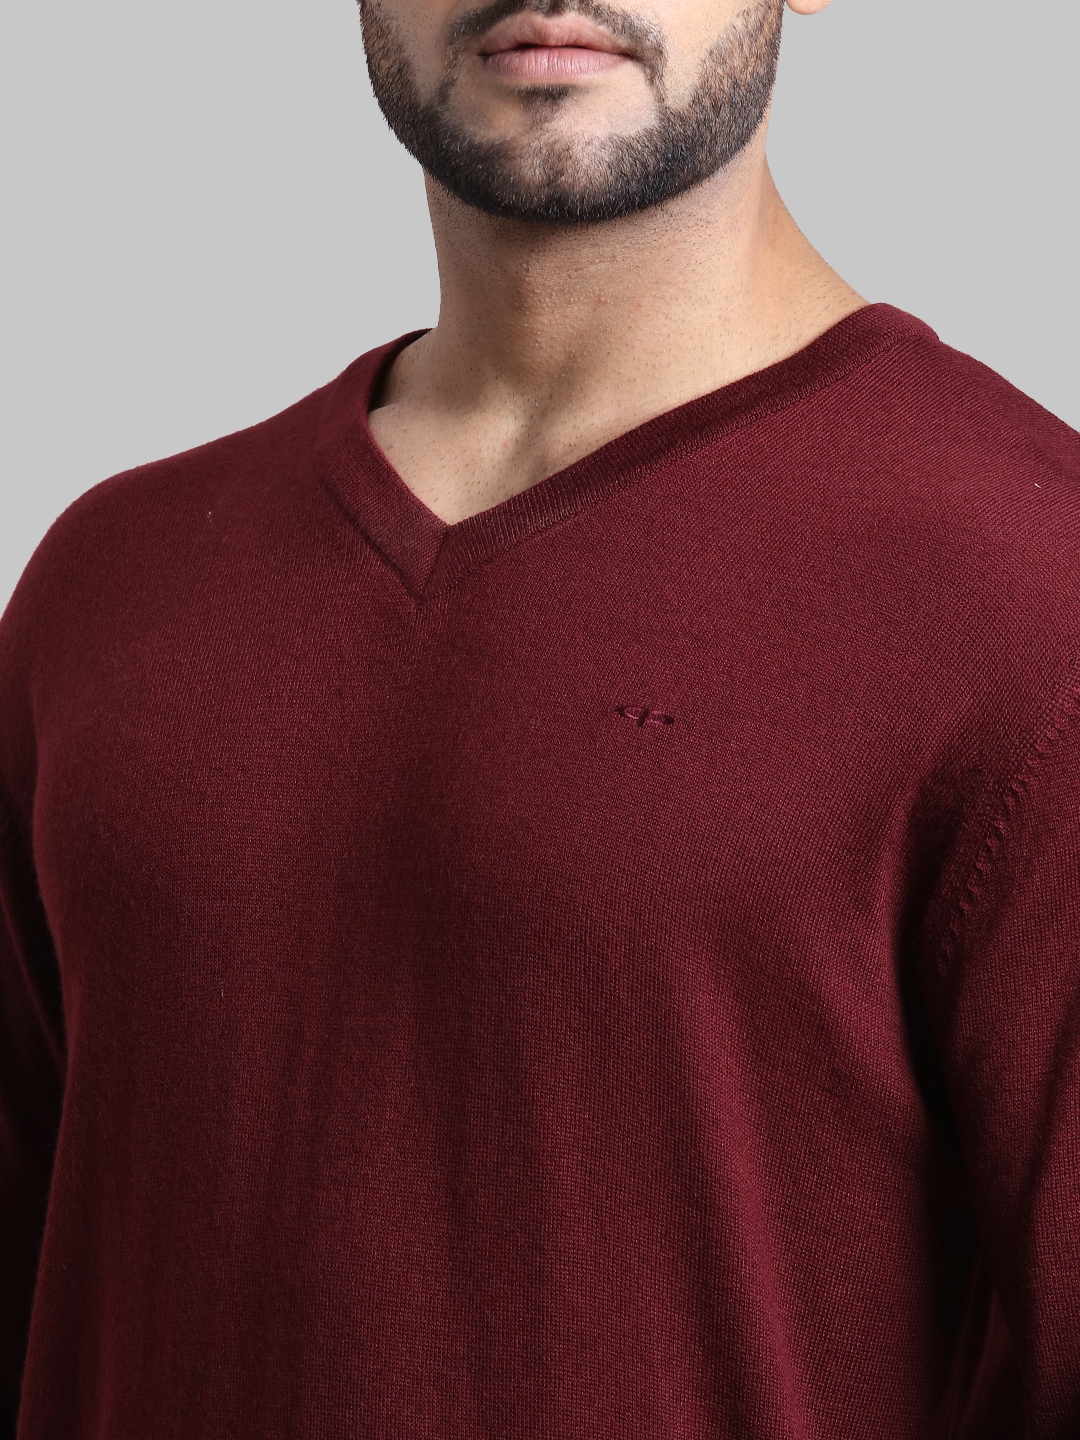 ColorPlus Dark Maroon Sweater